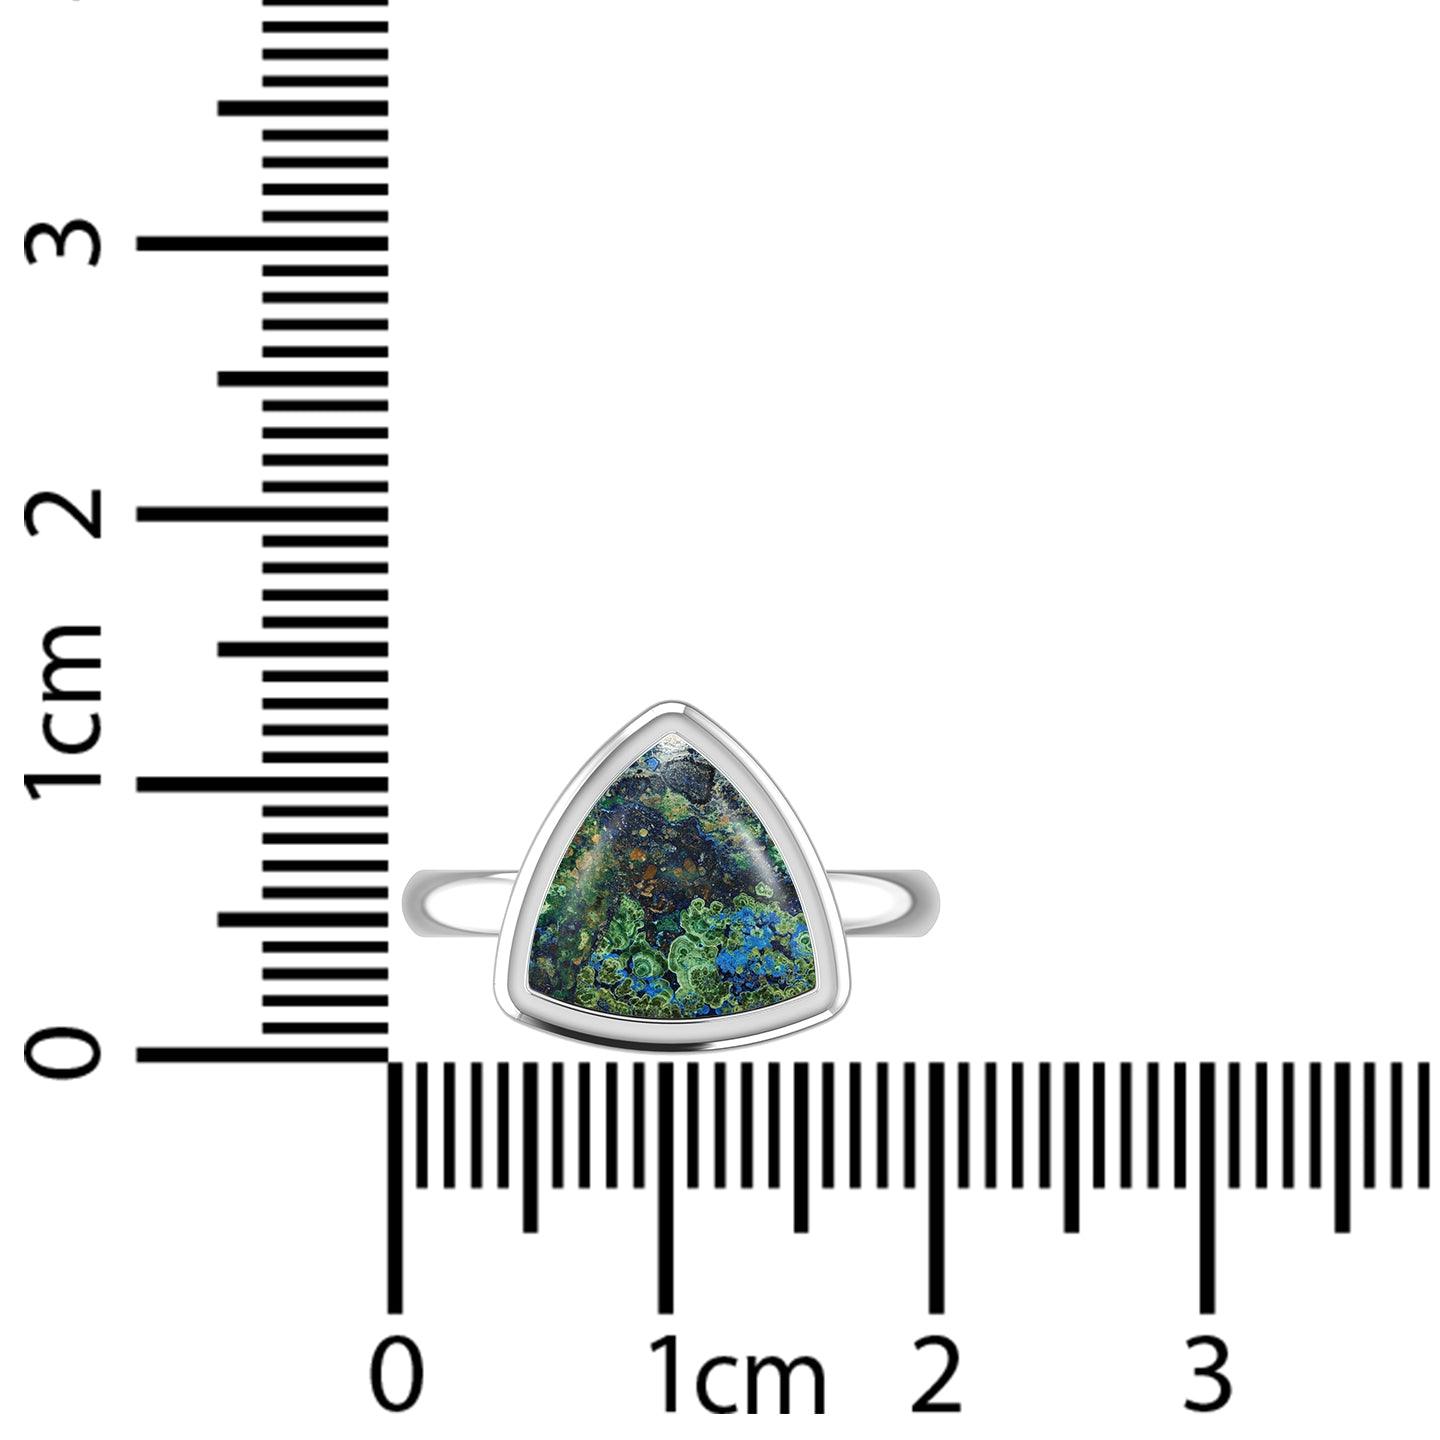 925 Sterling Silver Natural Azurite Malachite Ring Handmade Jewelry Pack of 6 - (Box 4)